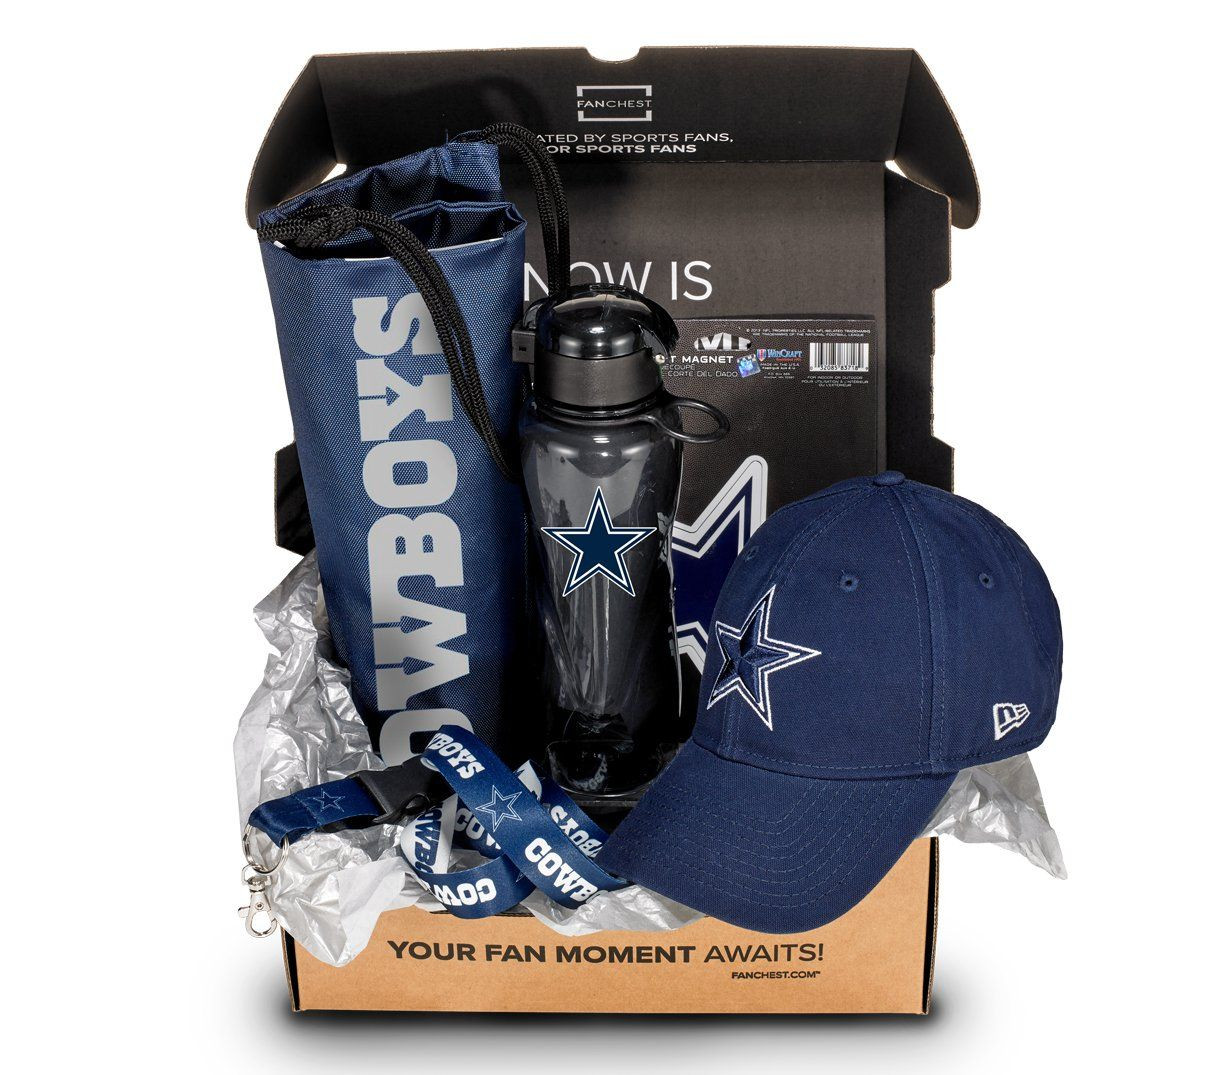 Dallas Cowboys Fan Gift Ideas
 Cowboys Youth Gift Box Cowboys Gear for Kids